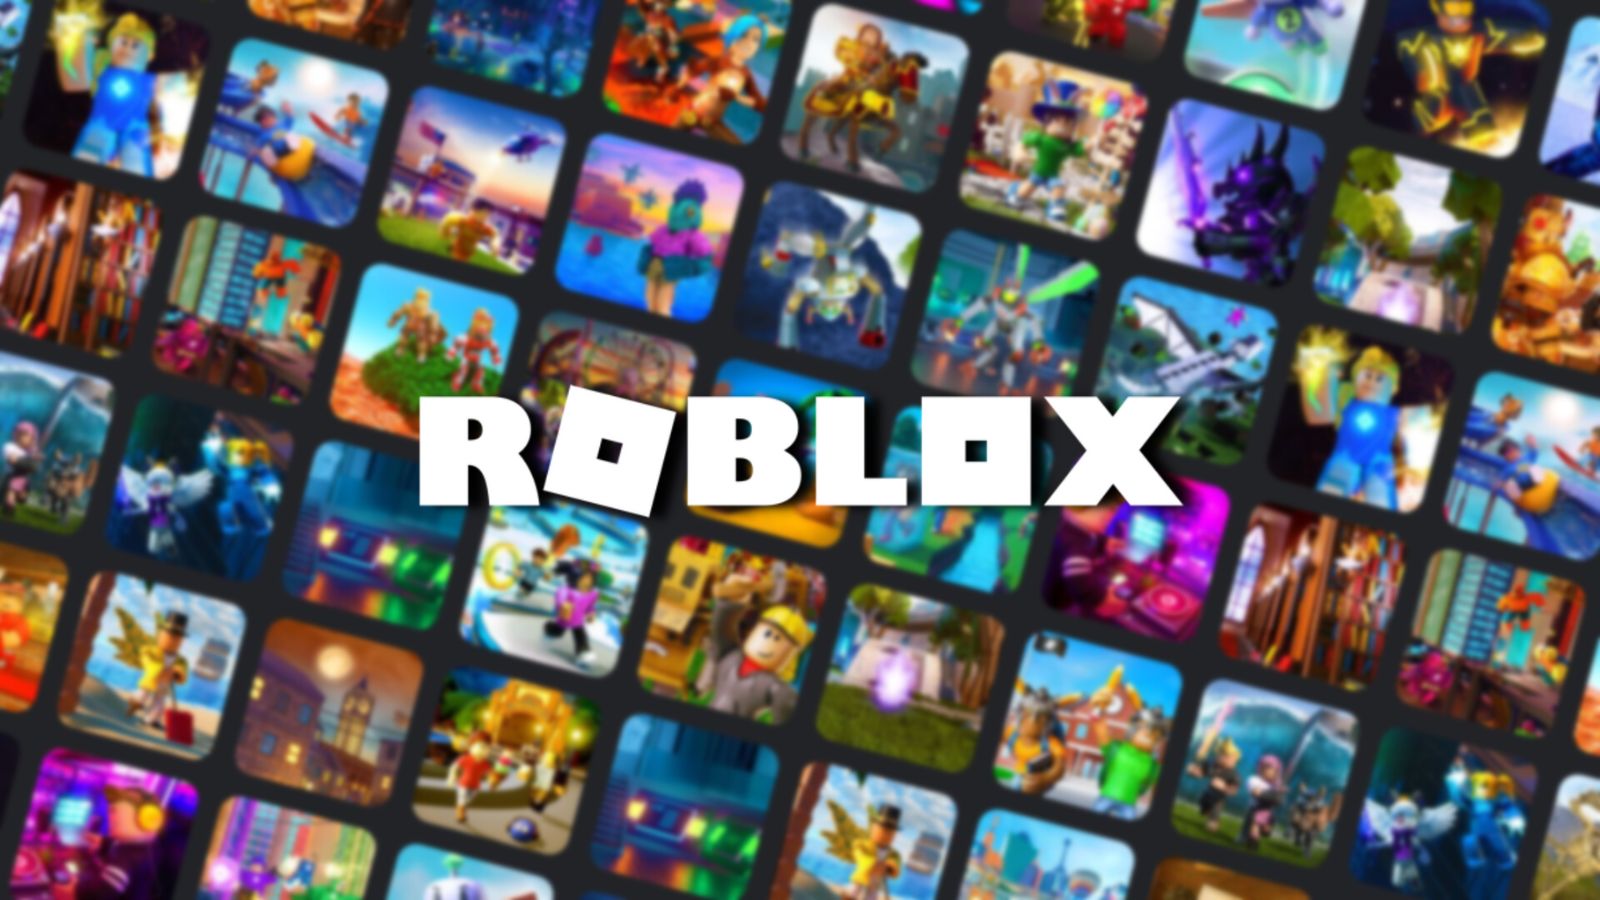 Roblox portrait mode? - Game Design Support - Developer Forum